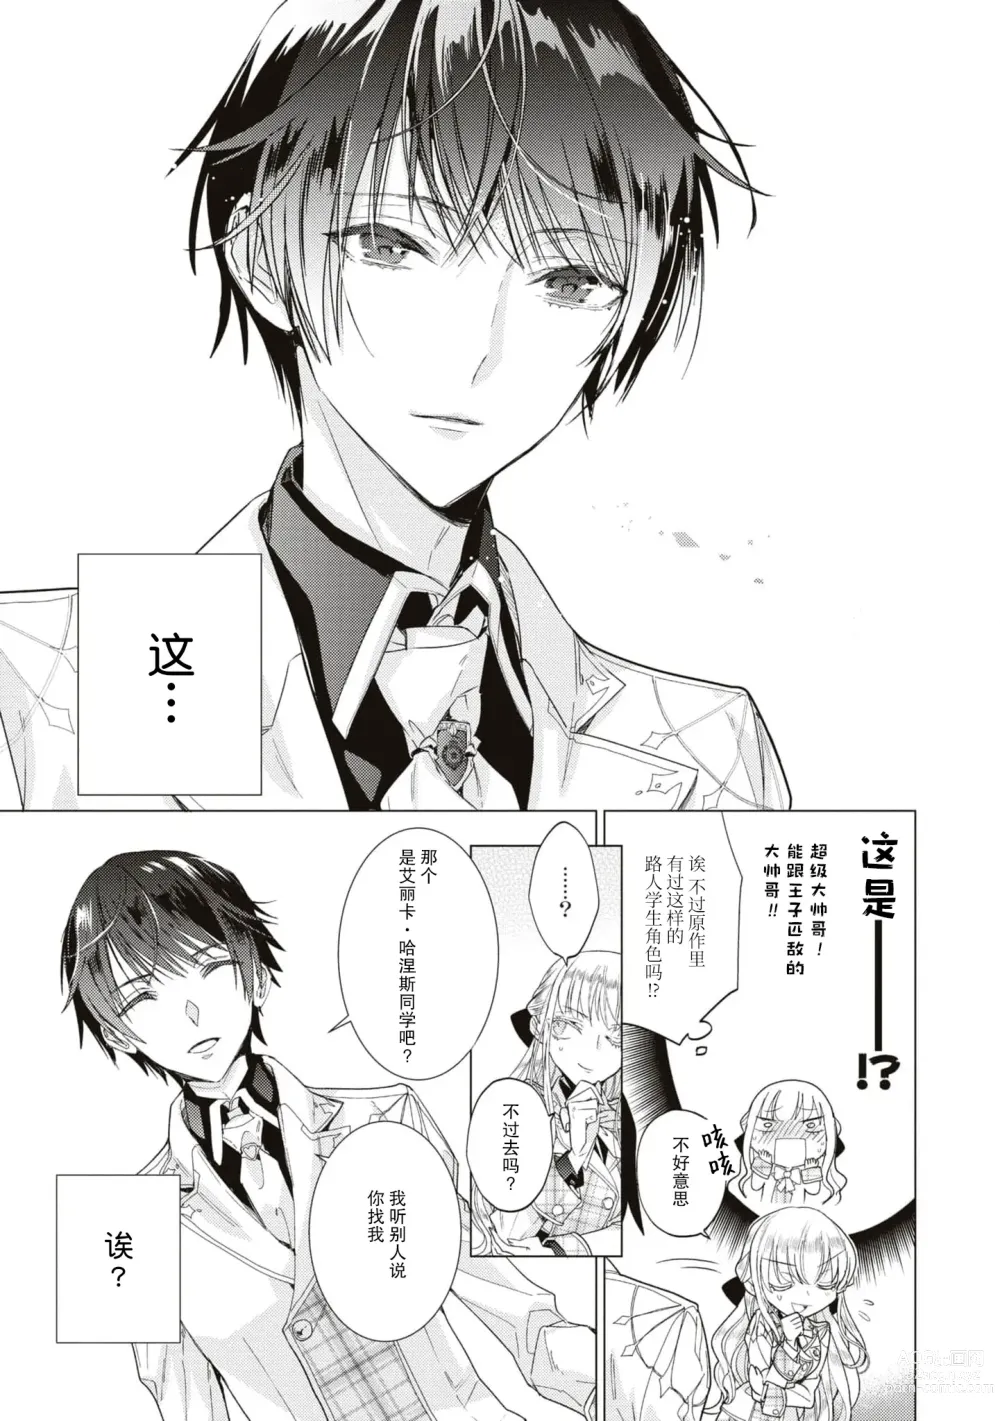 Page 9 of manga 全力扮演恶役大小姐的我，却遇上变成邻国王子的性转主人公